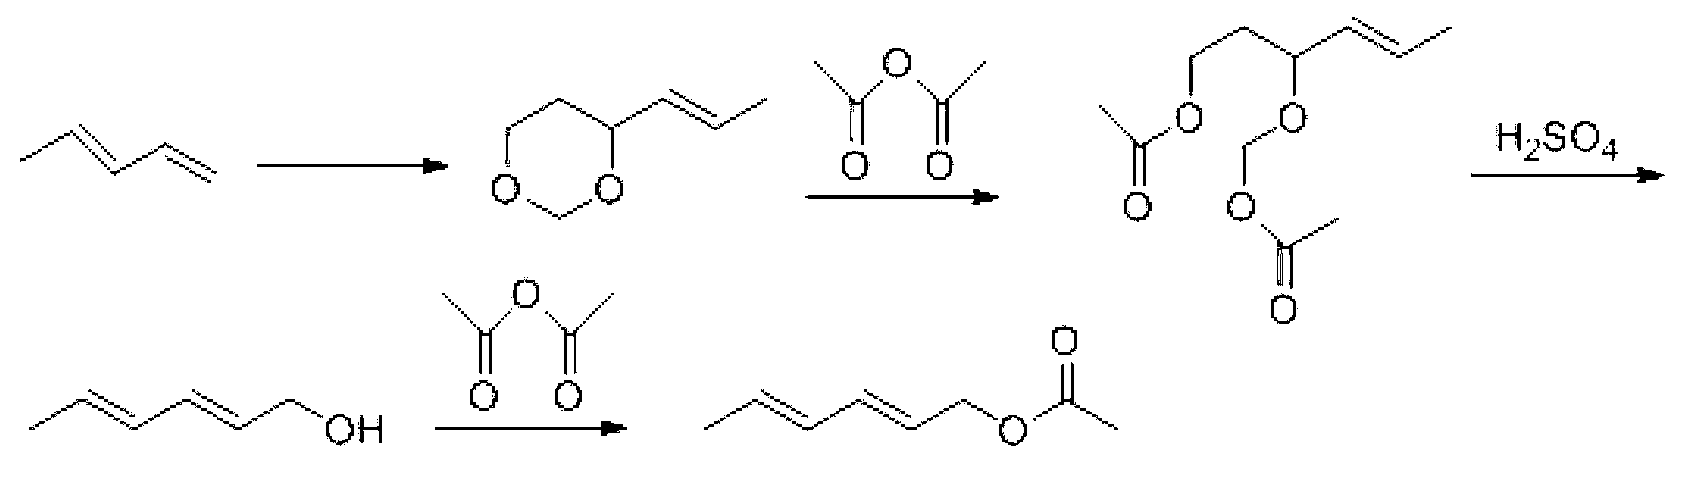 Preparation method for trans, trans-2,4-hexadiene acetate